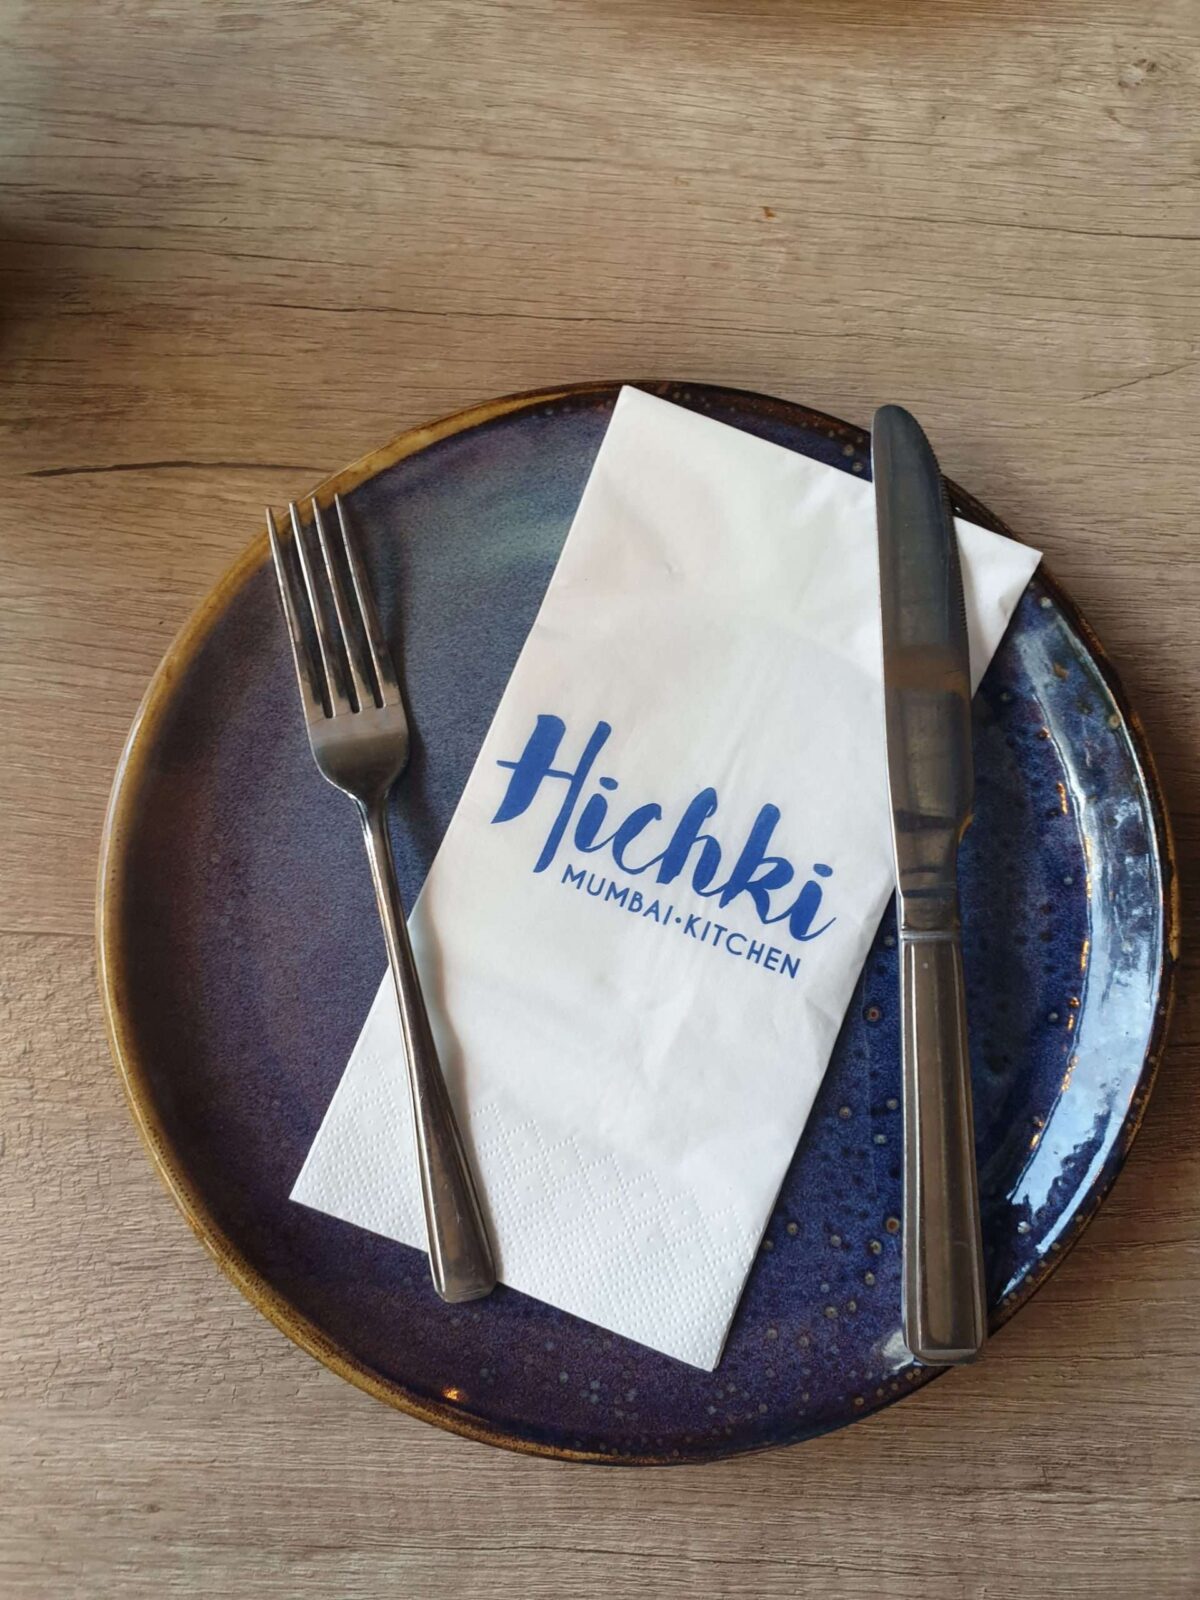 Hichki London - Mumbai's Street Food